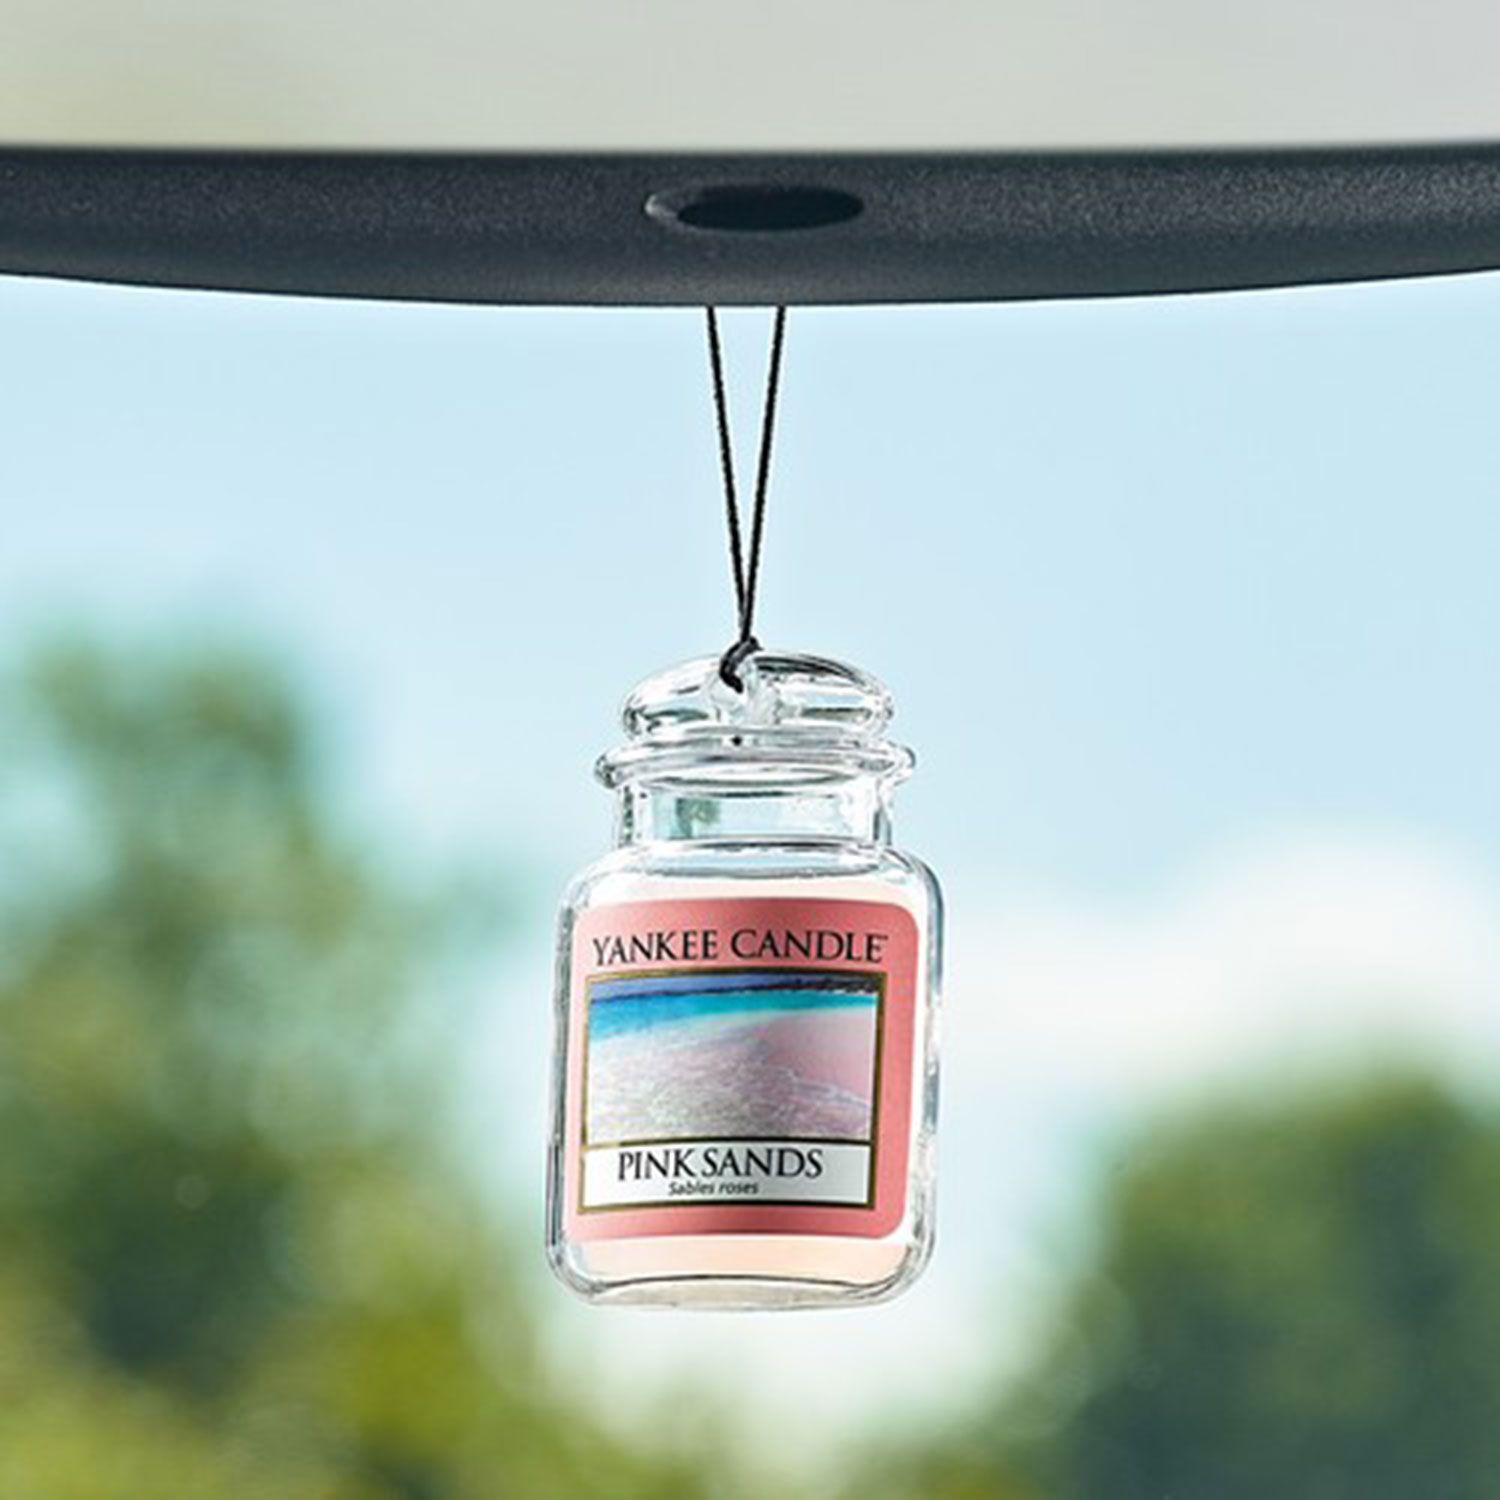 Yankee Candles 3 x Pink Sands car jar Ultimate Air Freshener, Festive Scent